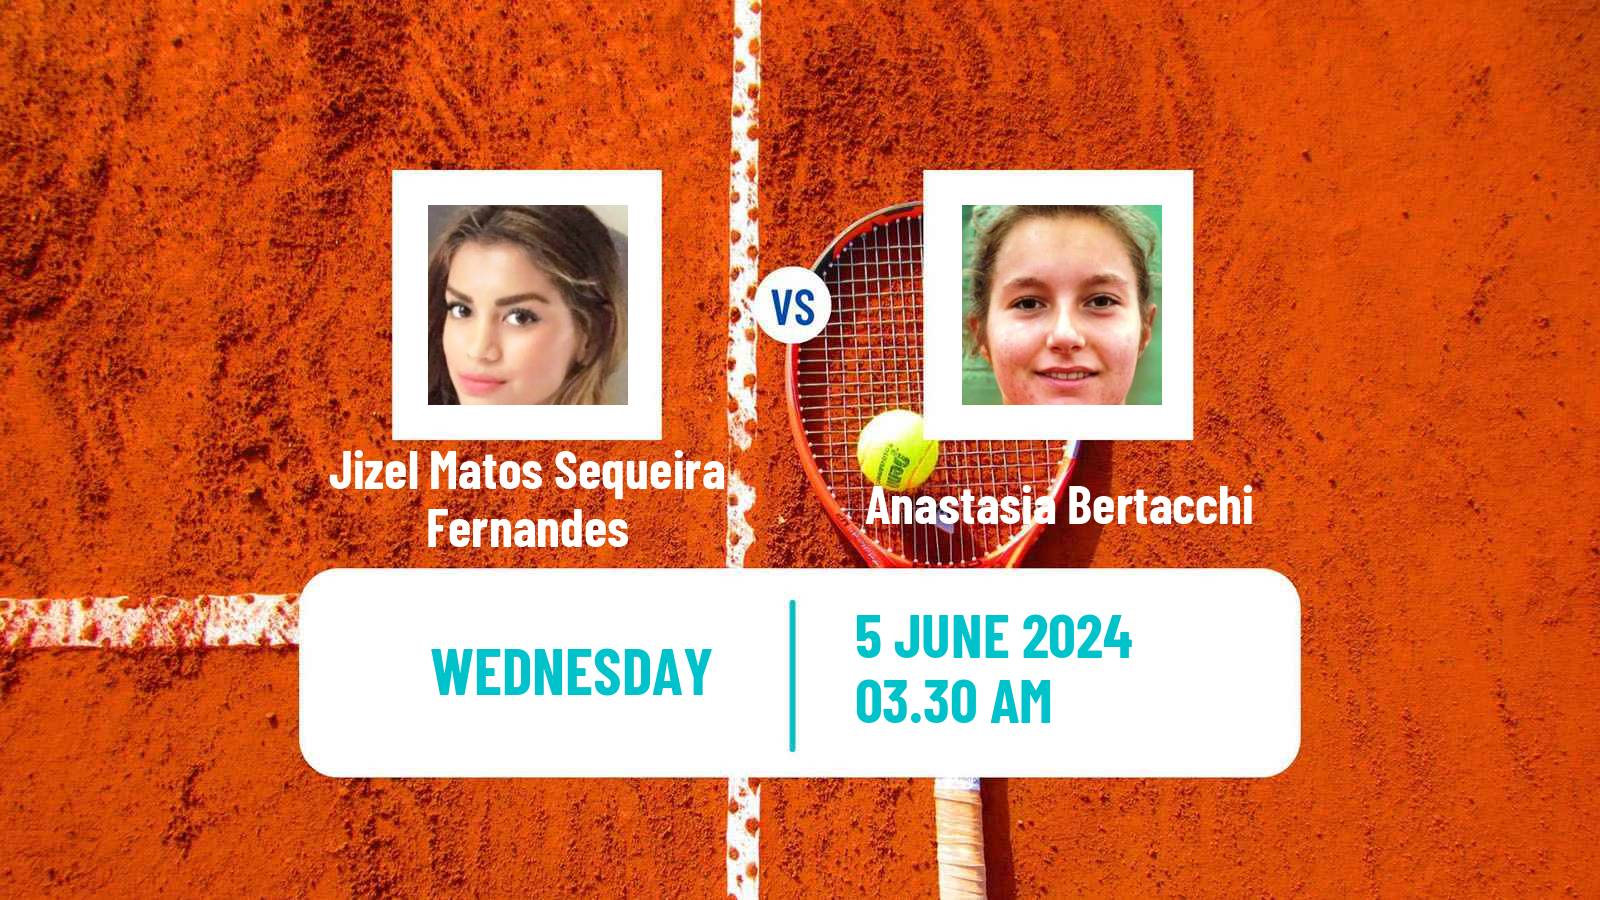 Tennis ITF W15 Focsani Women Jizel Matos Sequeira Fernandes - Anastasia Bertacchi